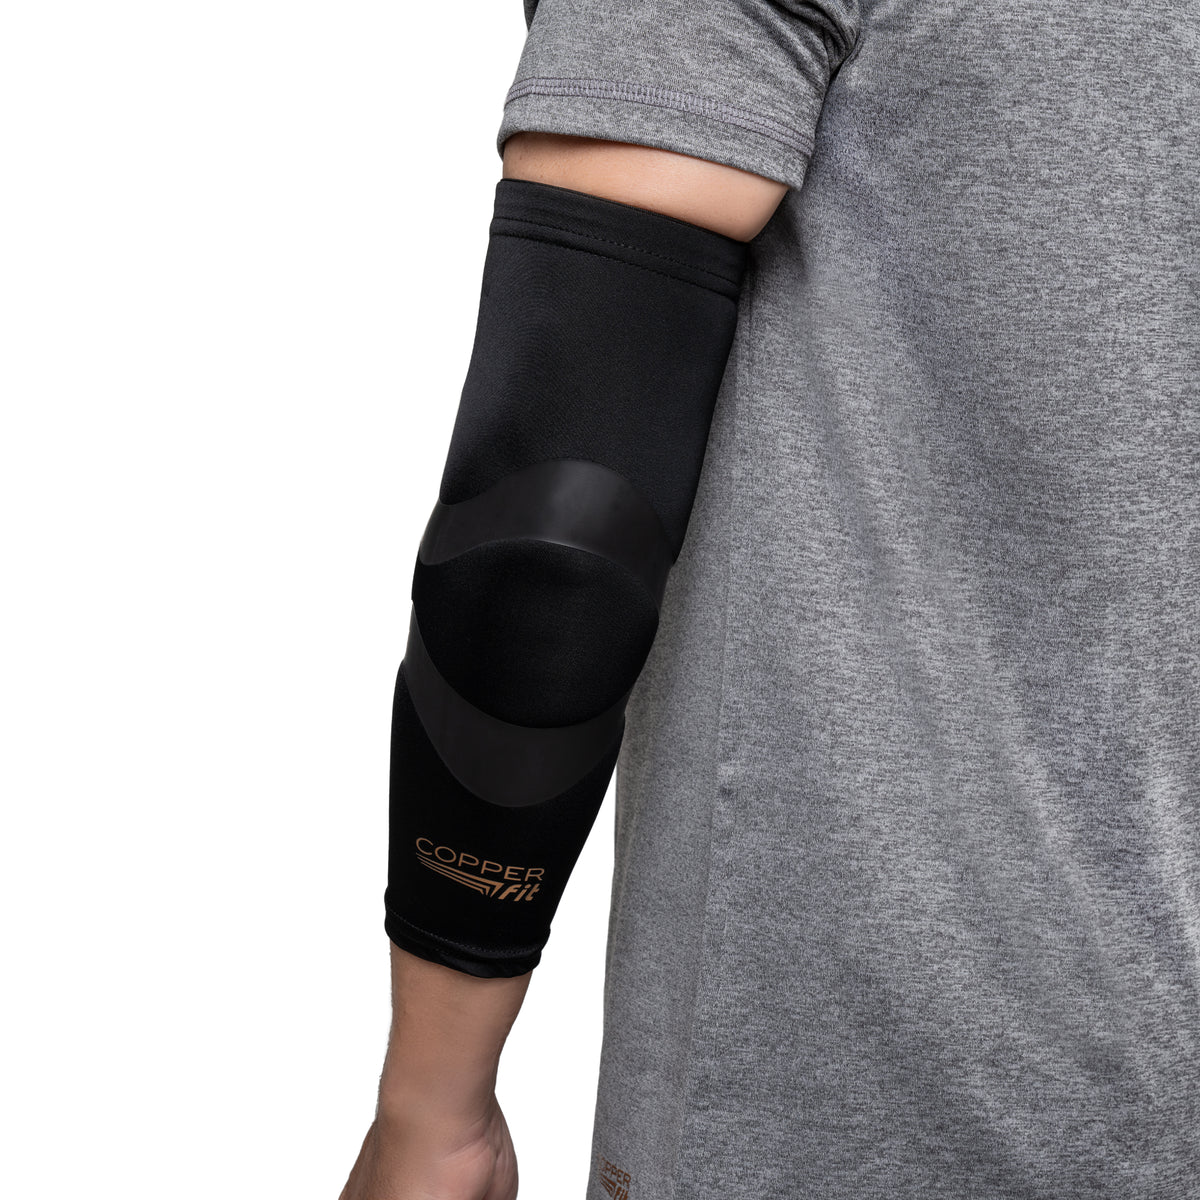 OrthoWare Premium Adjustable Compression Elbow Sleeve